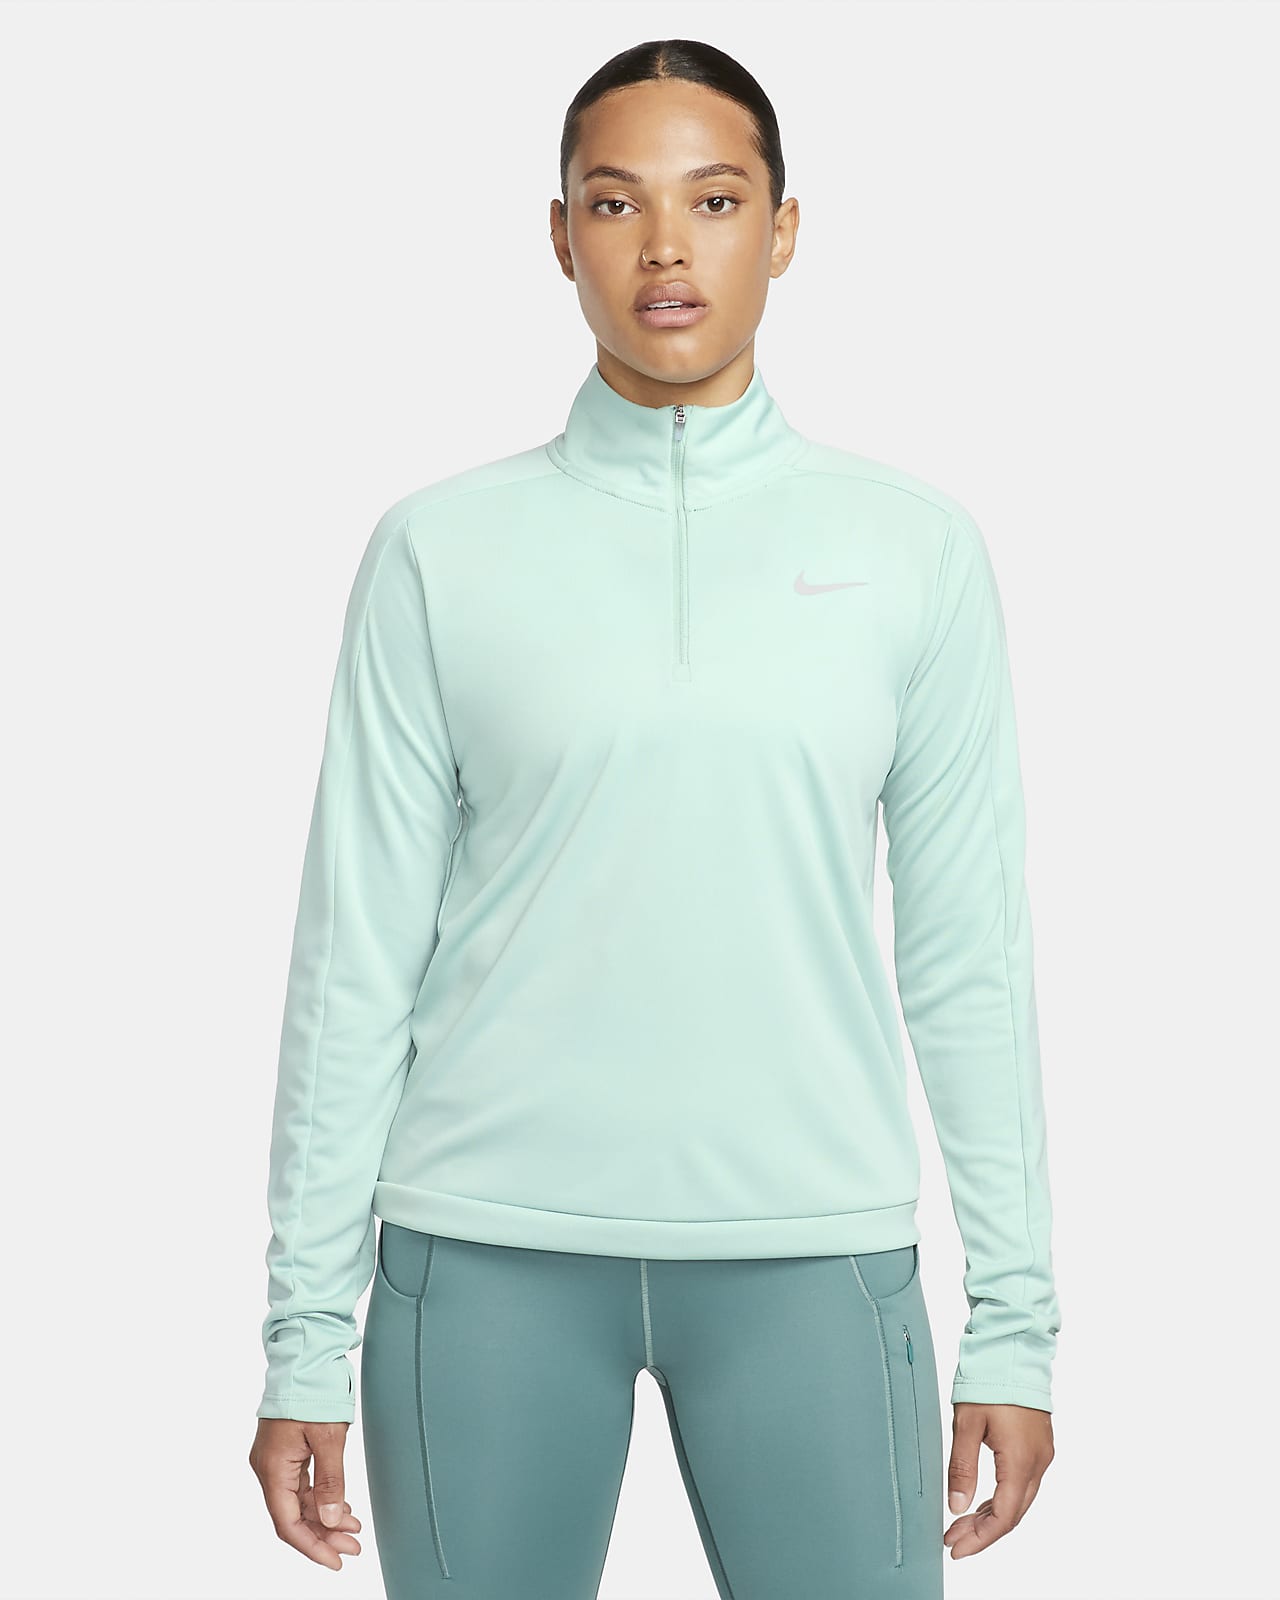 sigte Skuldre på skuldrene nåde Nike Dri-FIT Pacer Women's 1/4-Zip Sweatshirt. Nike LU